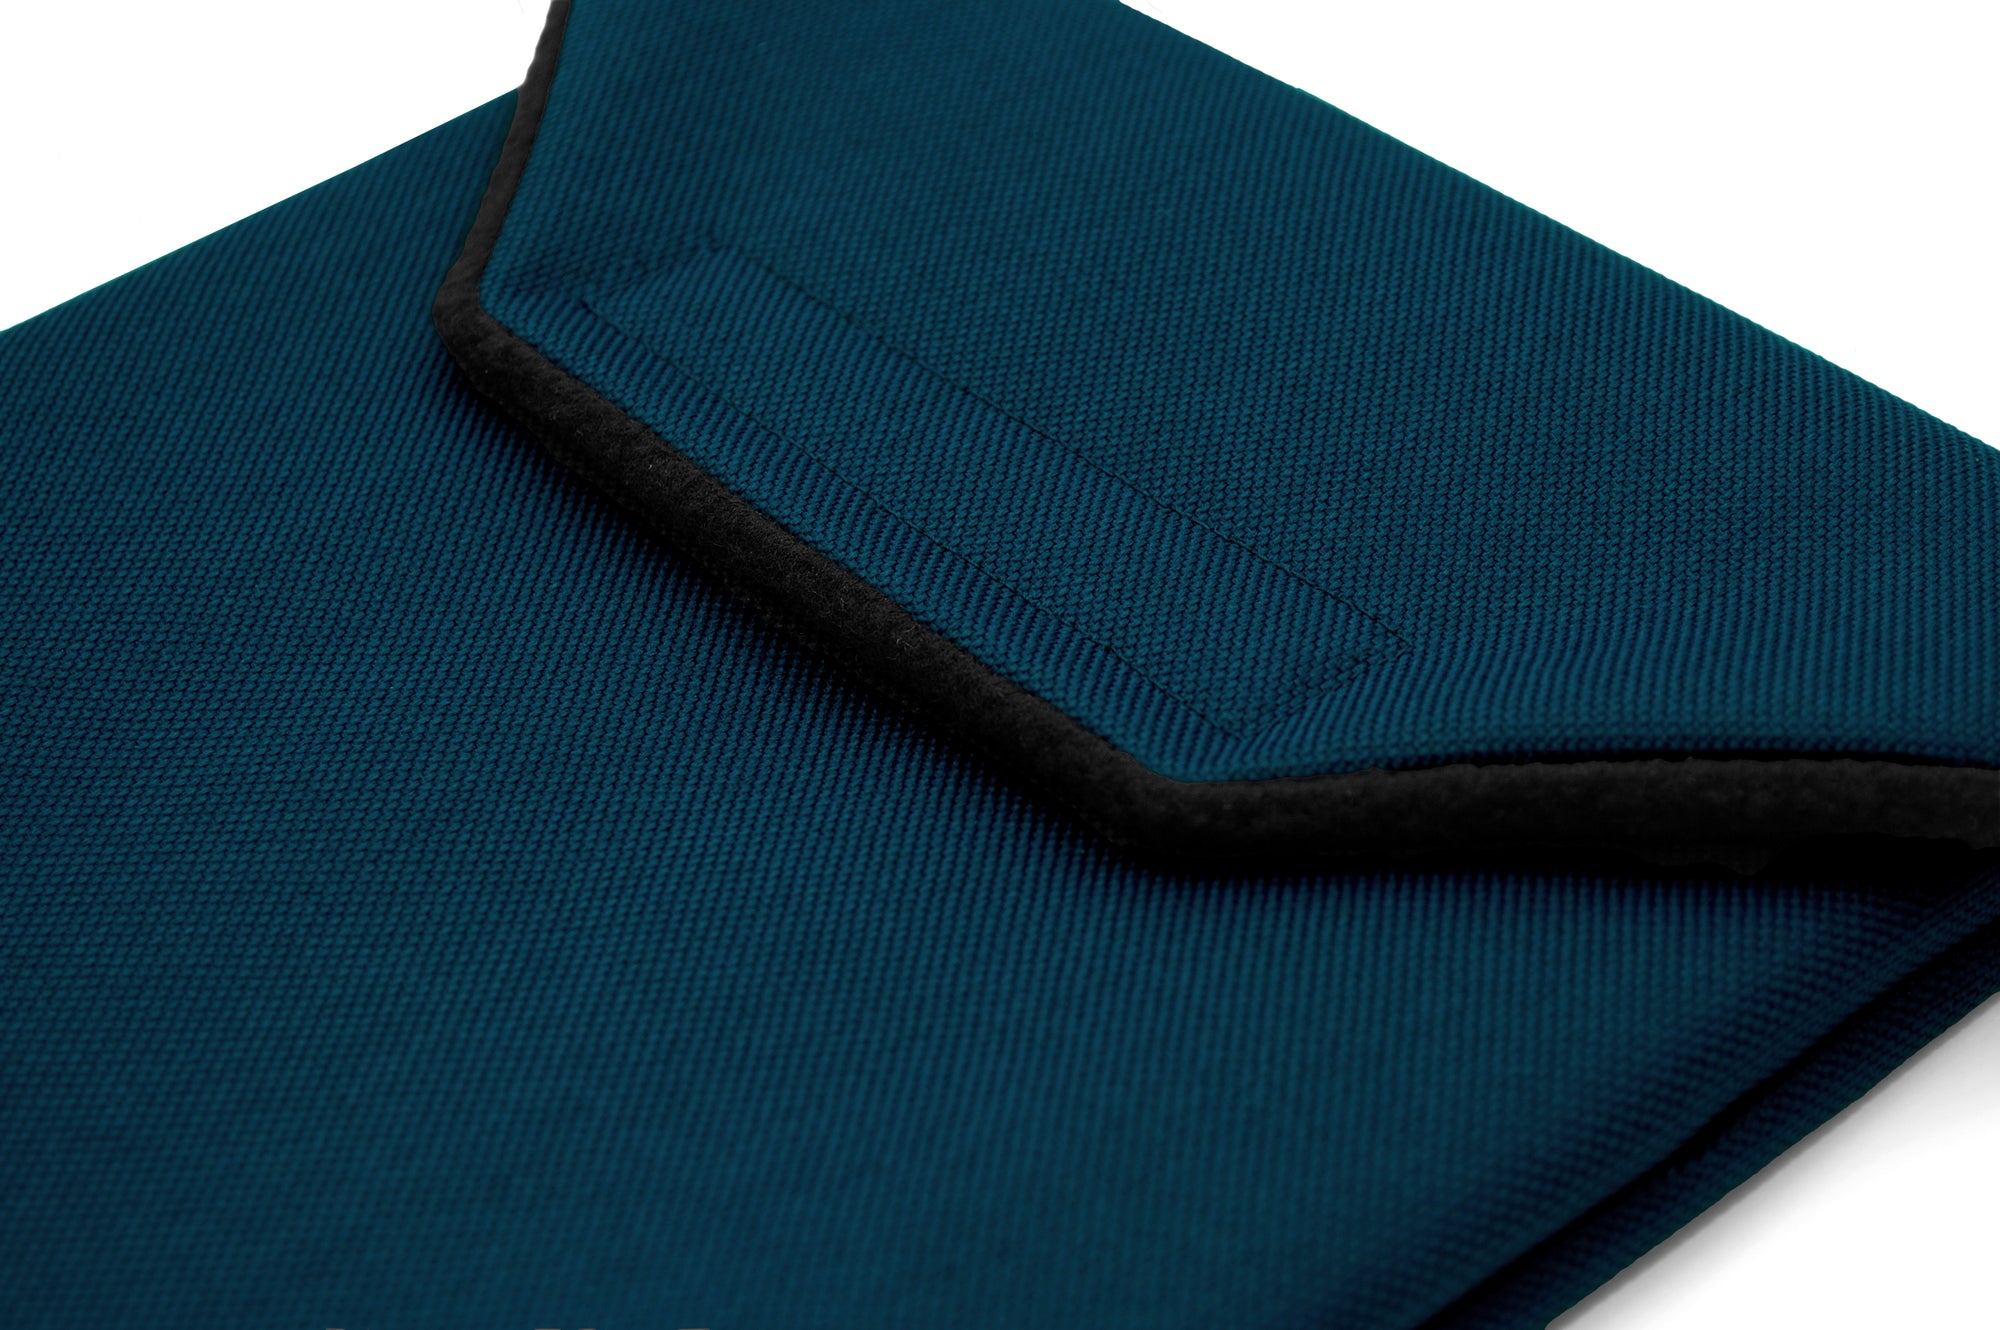 iPad 9.7-inch Sleeve Case - Navy Blue Canvas